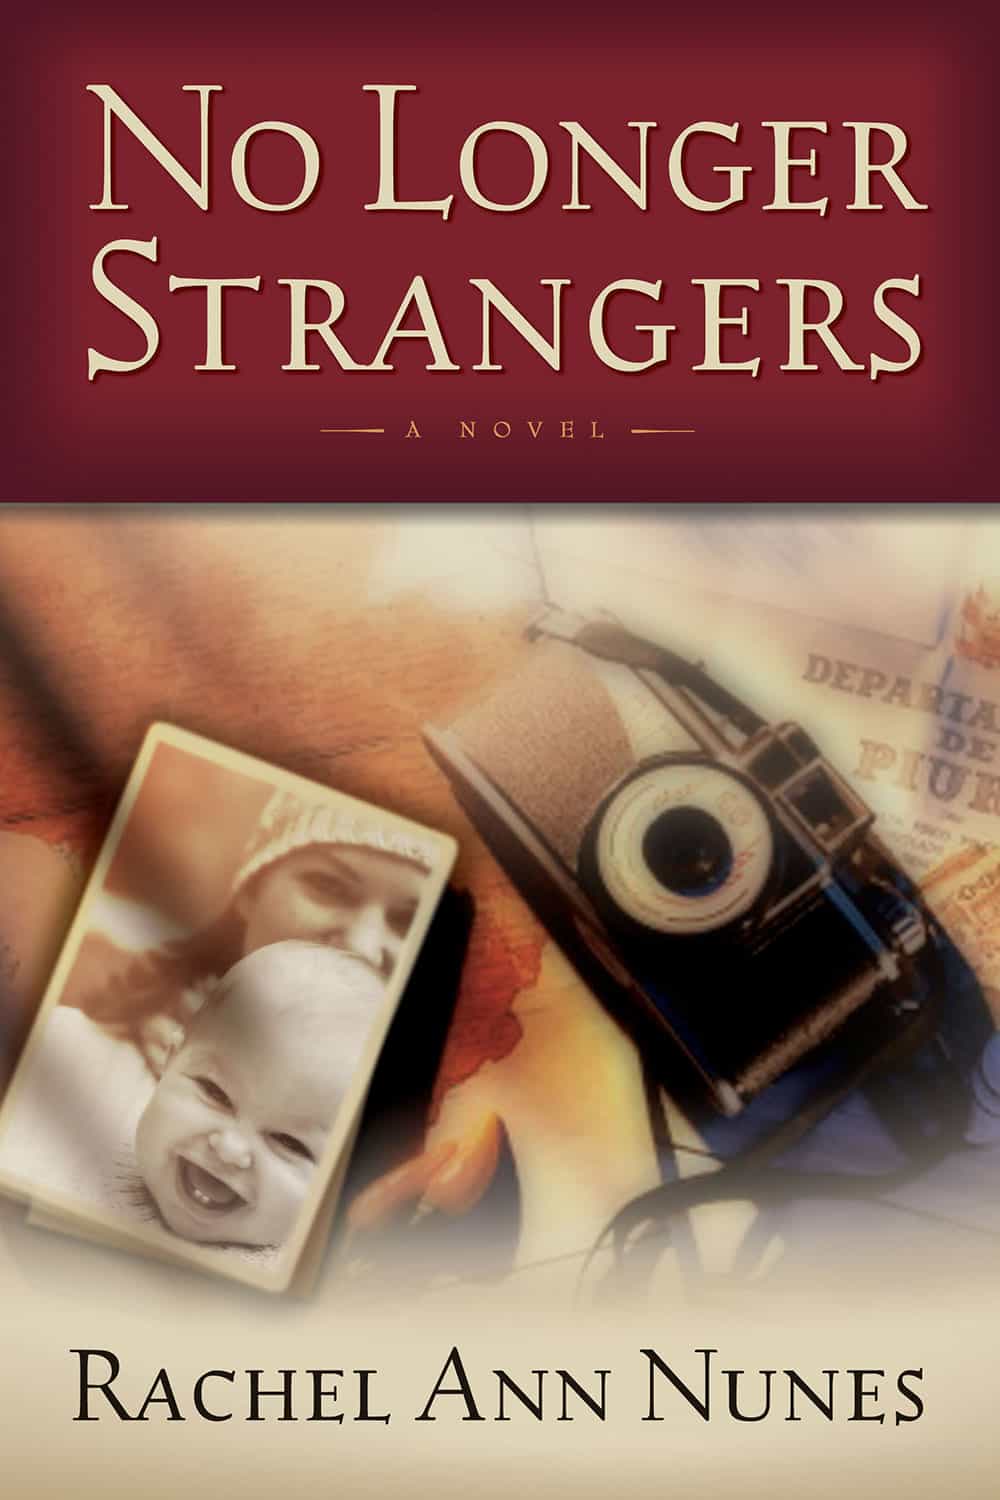 No Longer Strangers by Rachel Ann Nunes